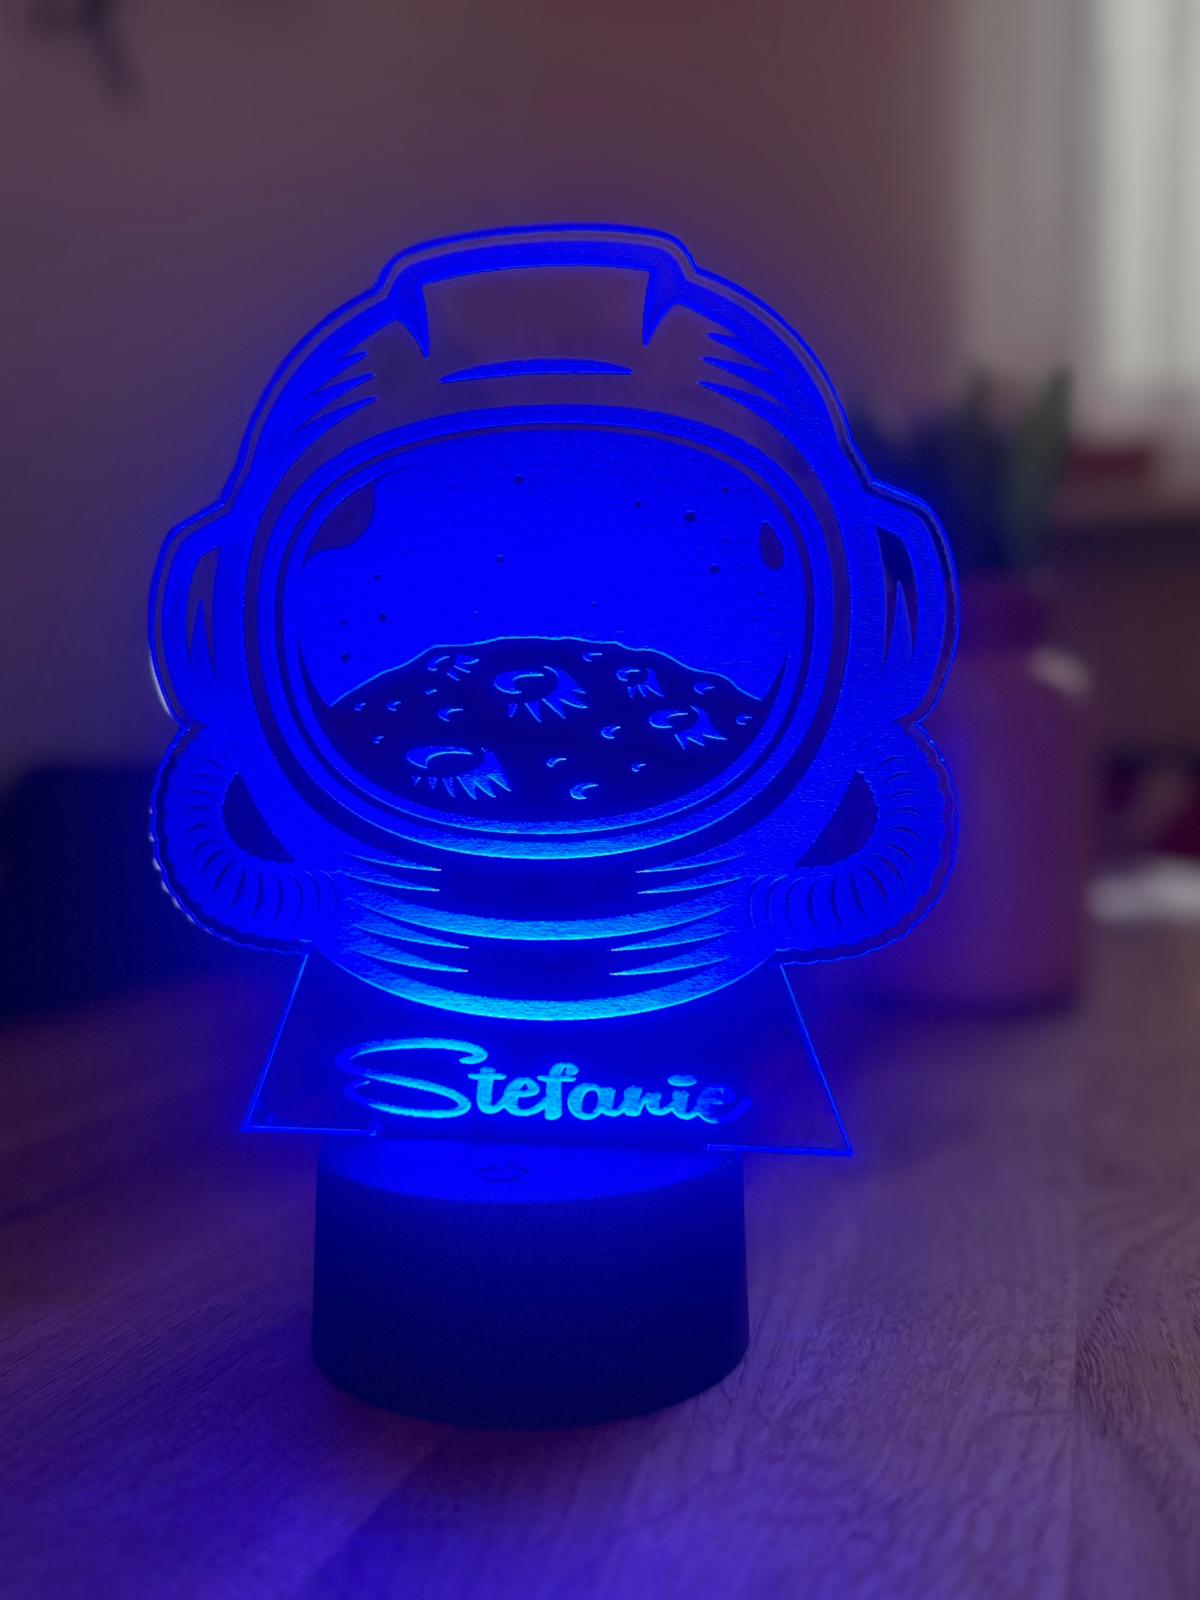 Astronautenhelm und Mondreflexion - Kinderzimmerlampe LED